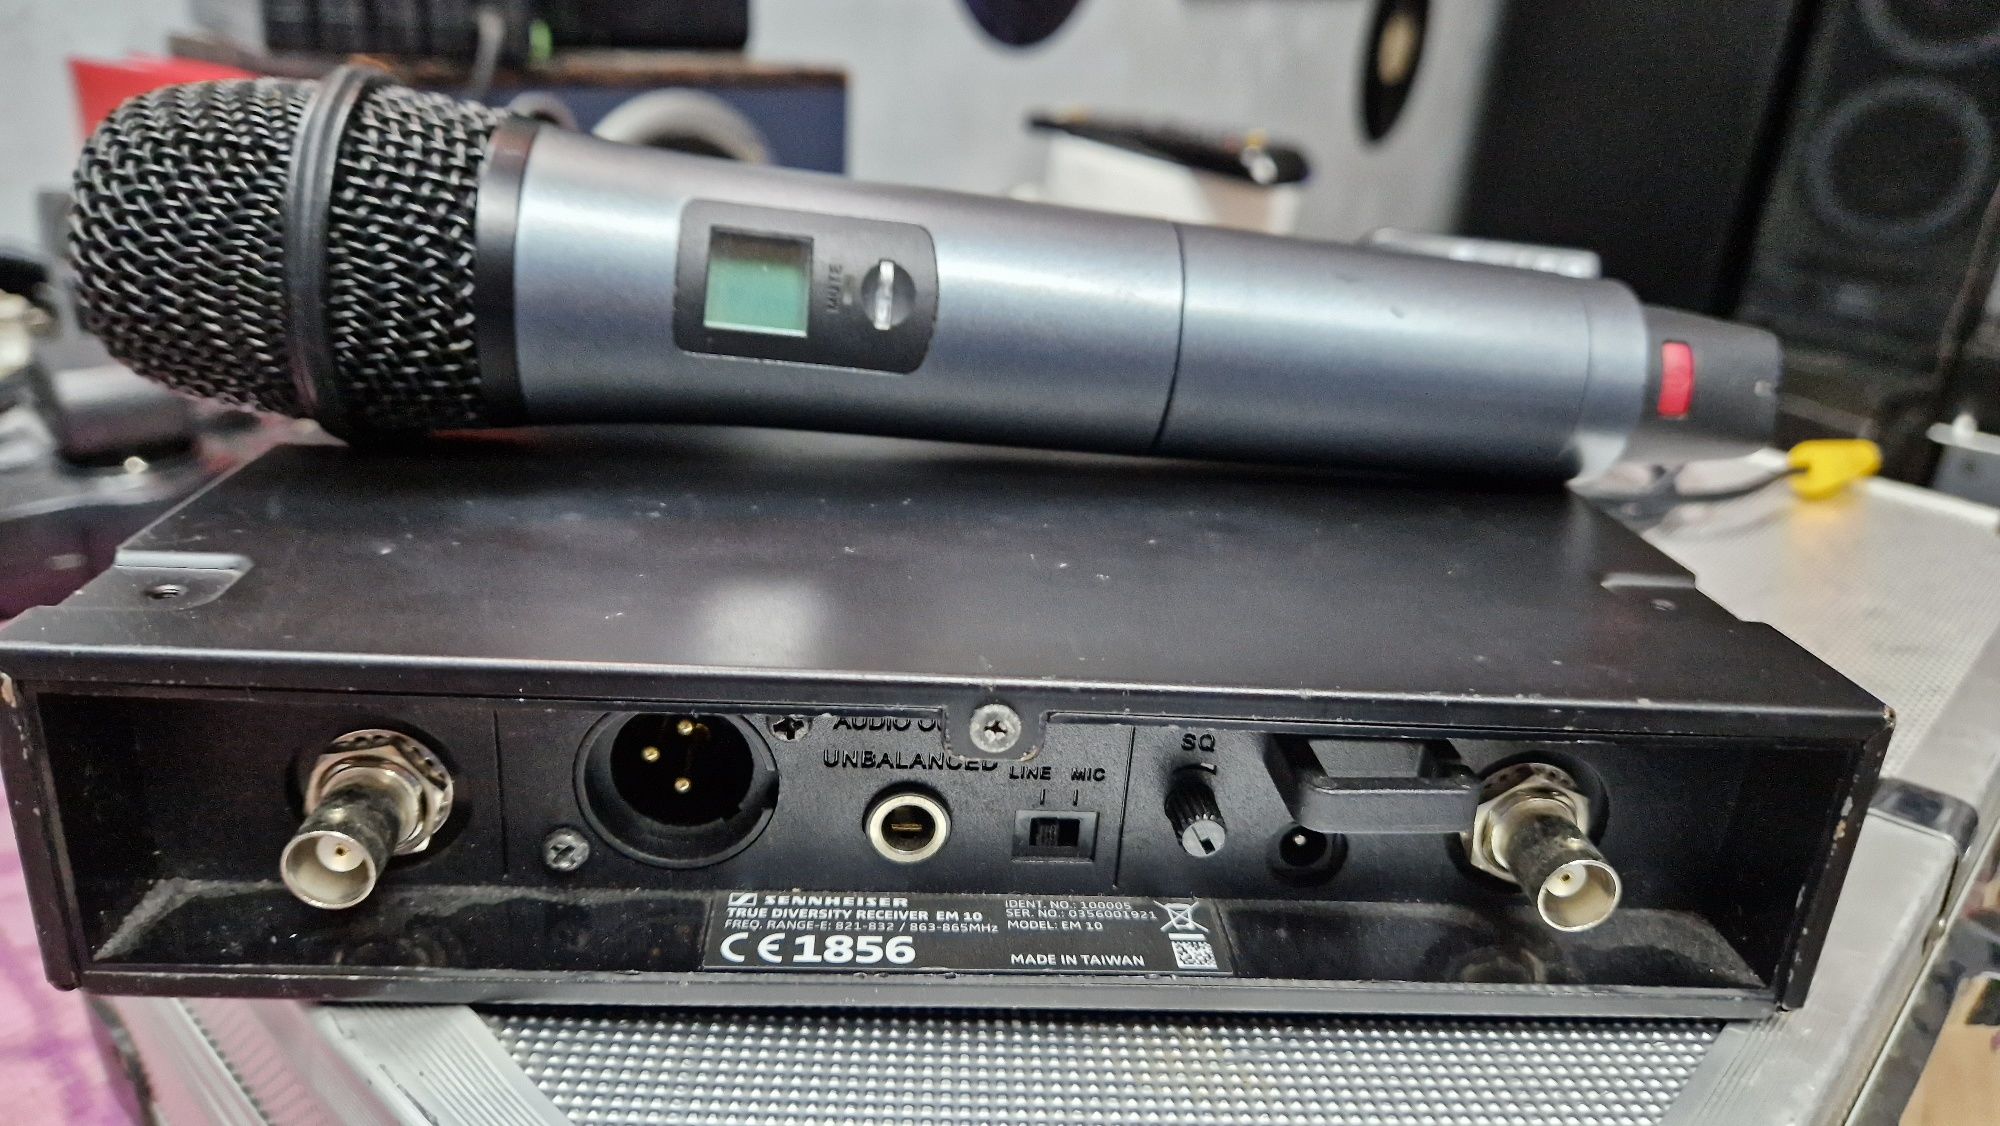 Microfon senheiser em 10  whireless (nu shure)